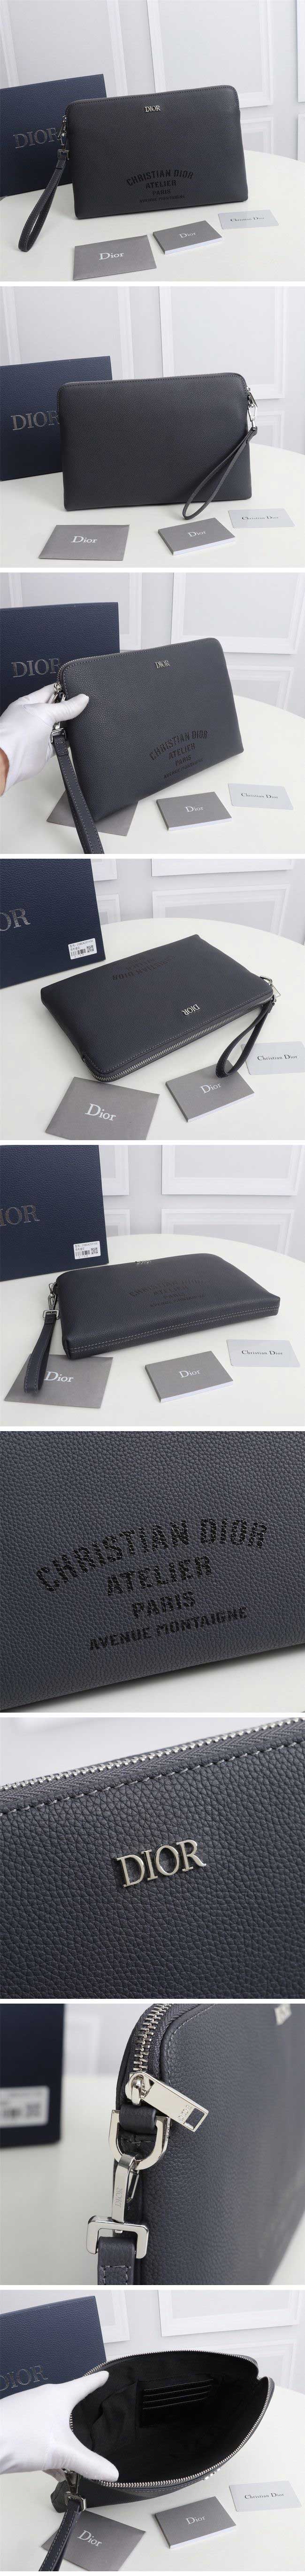 Dior Atelier Clutch Bag ディオール アトリエ クラッチバッグ